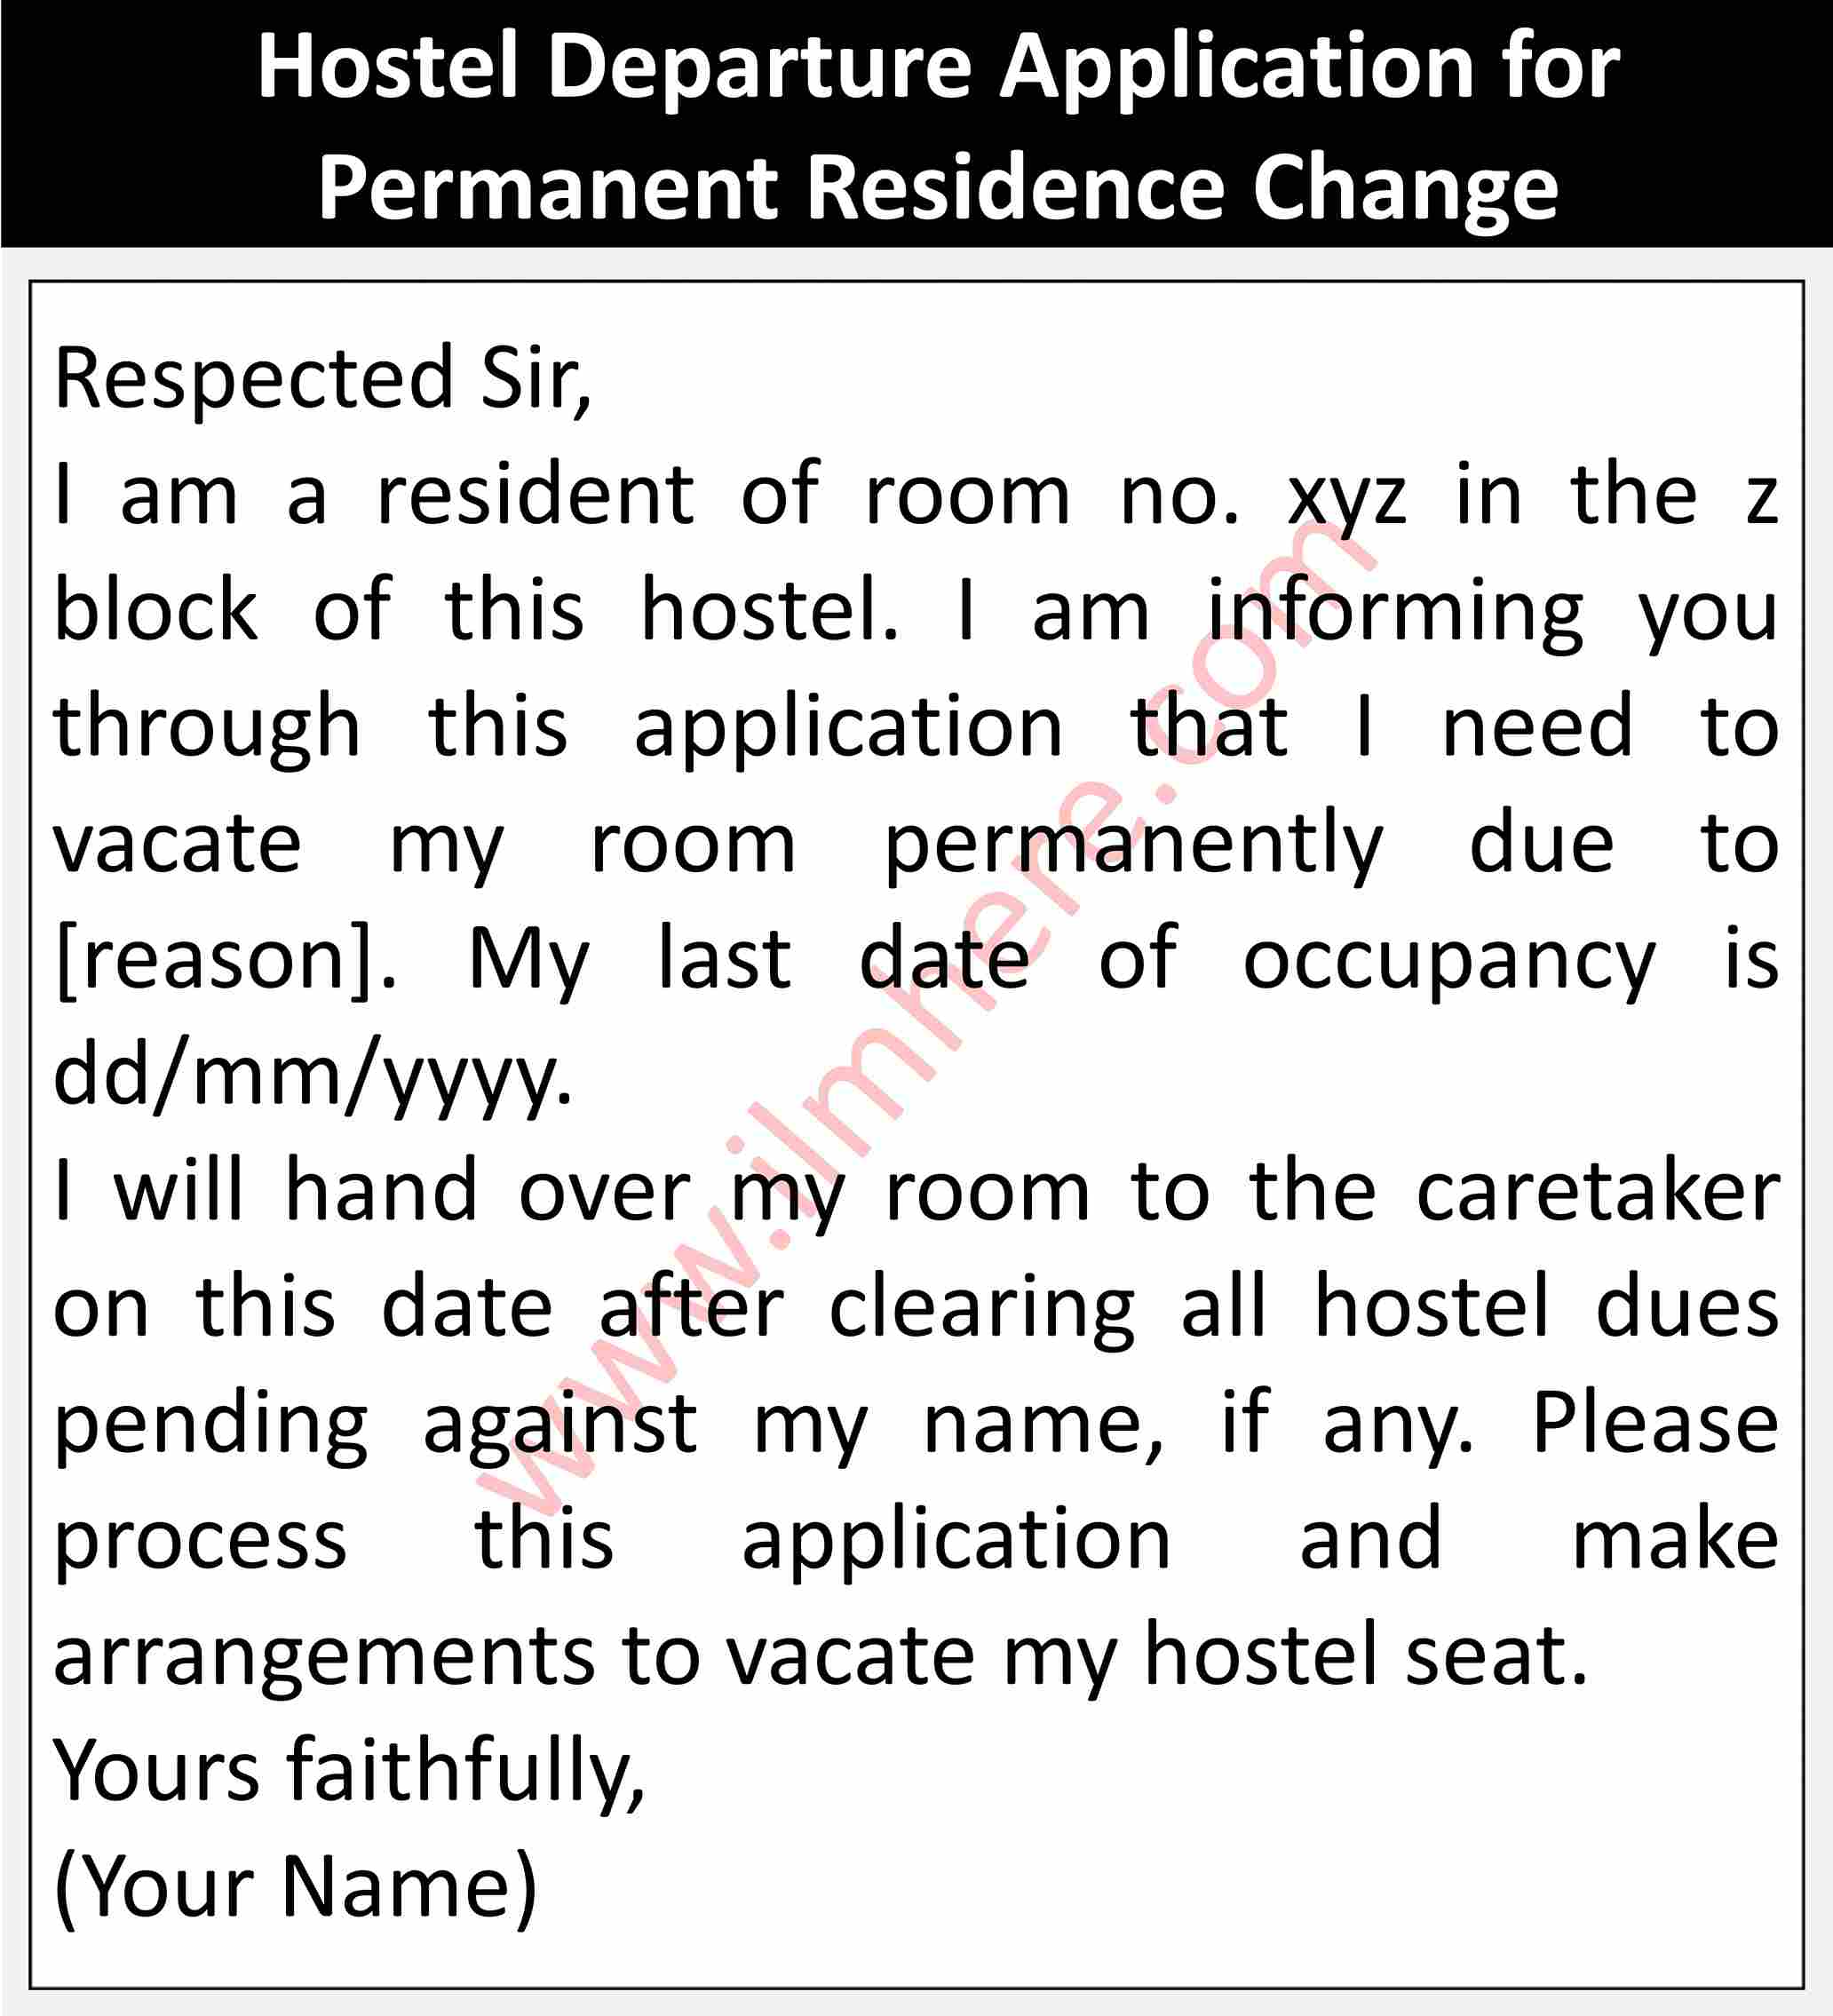 Hostel Departure Application for Permanent Residence Change